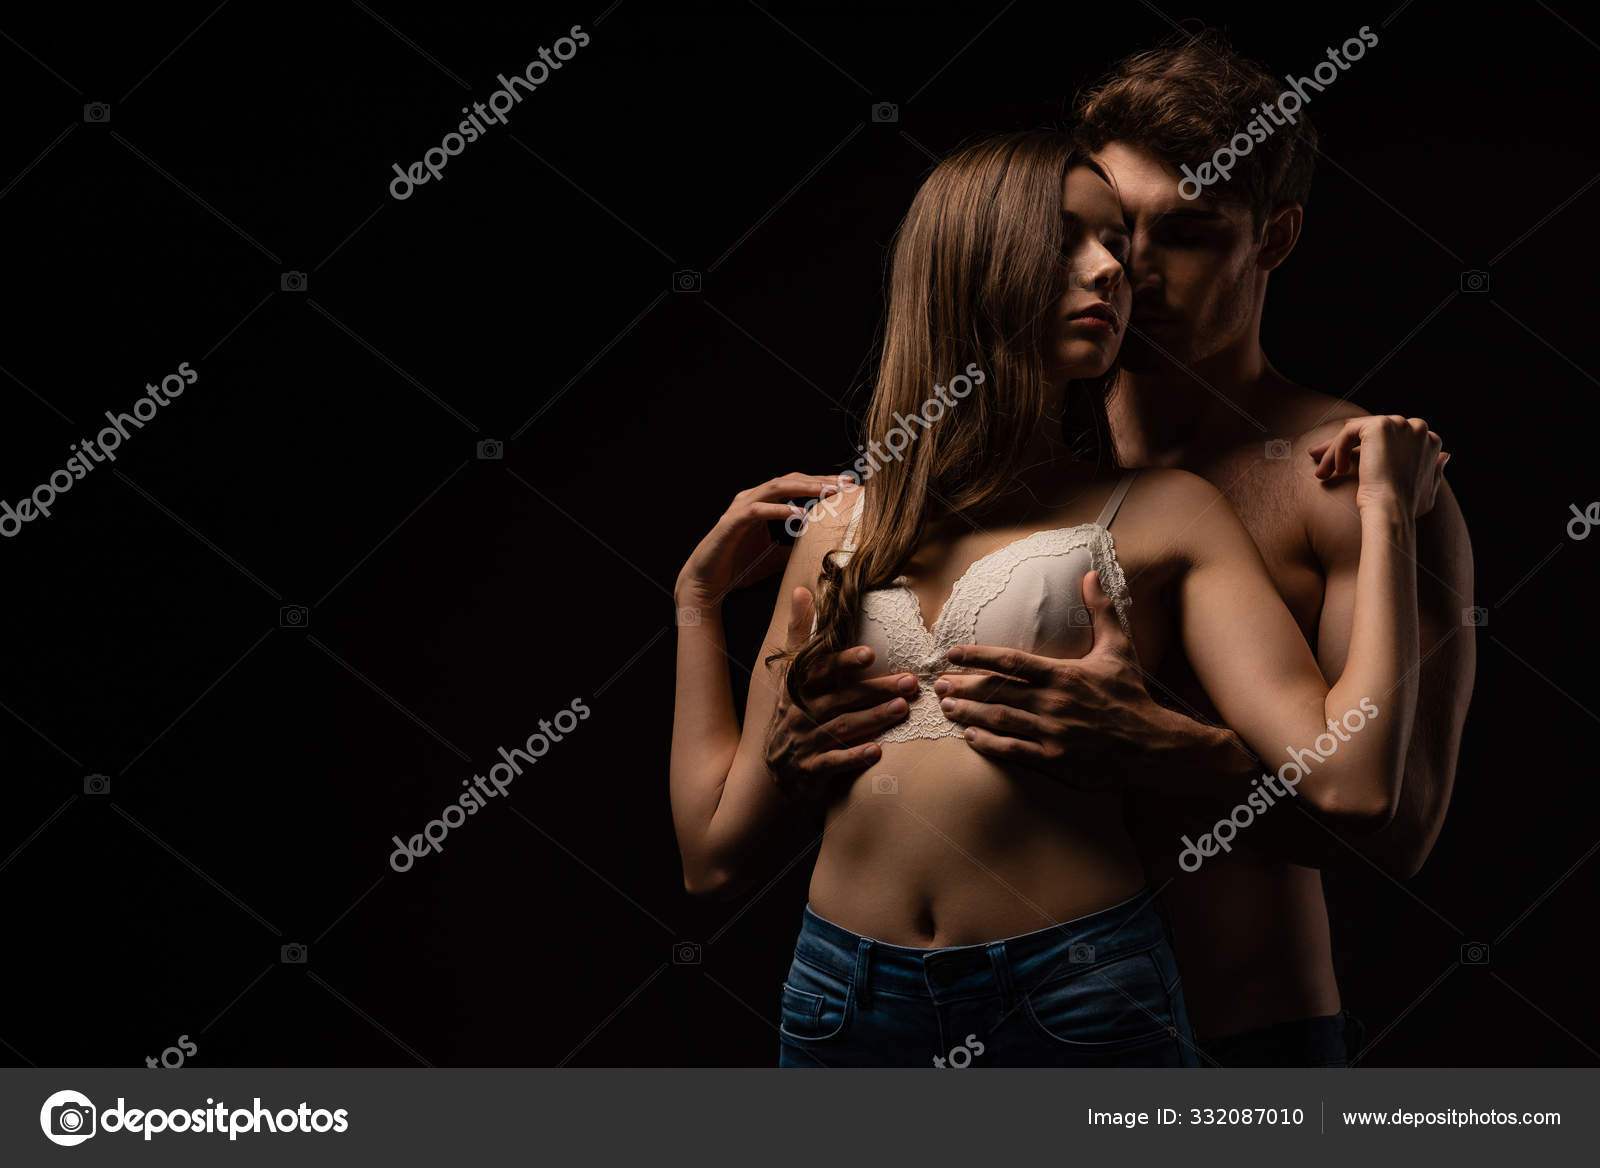 girlfriend against boob touch